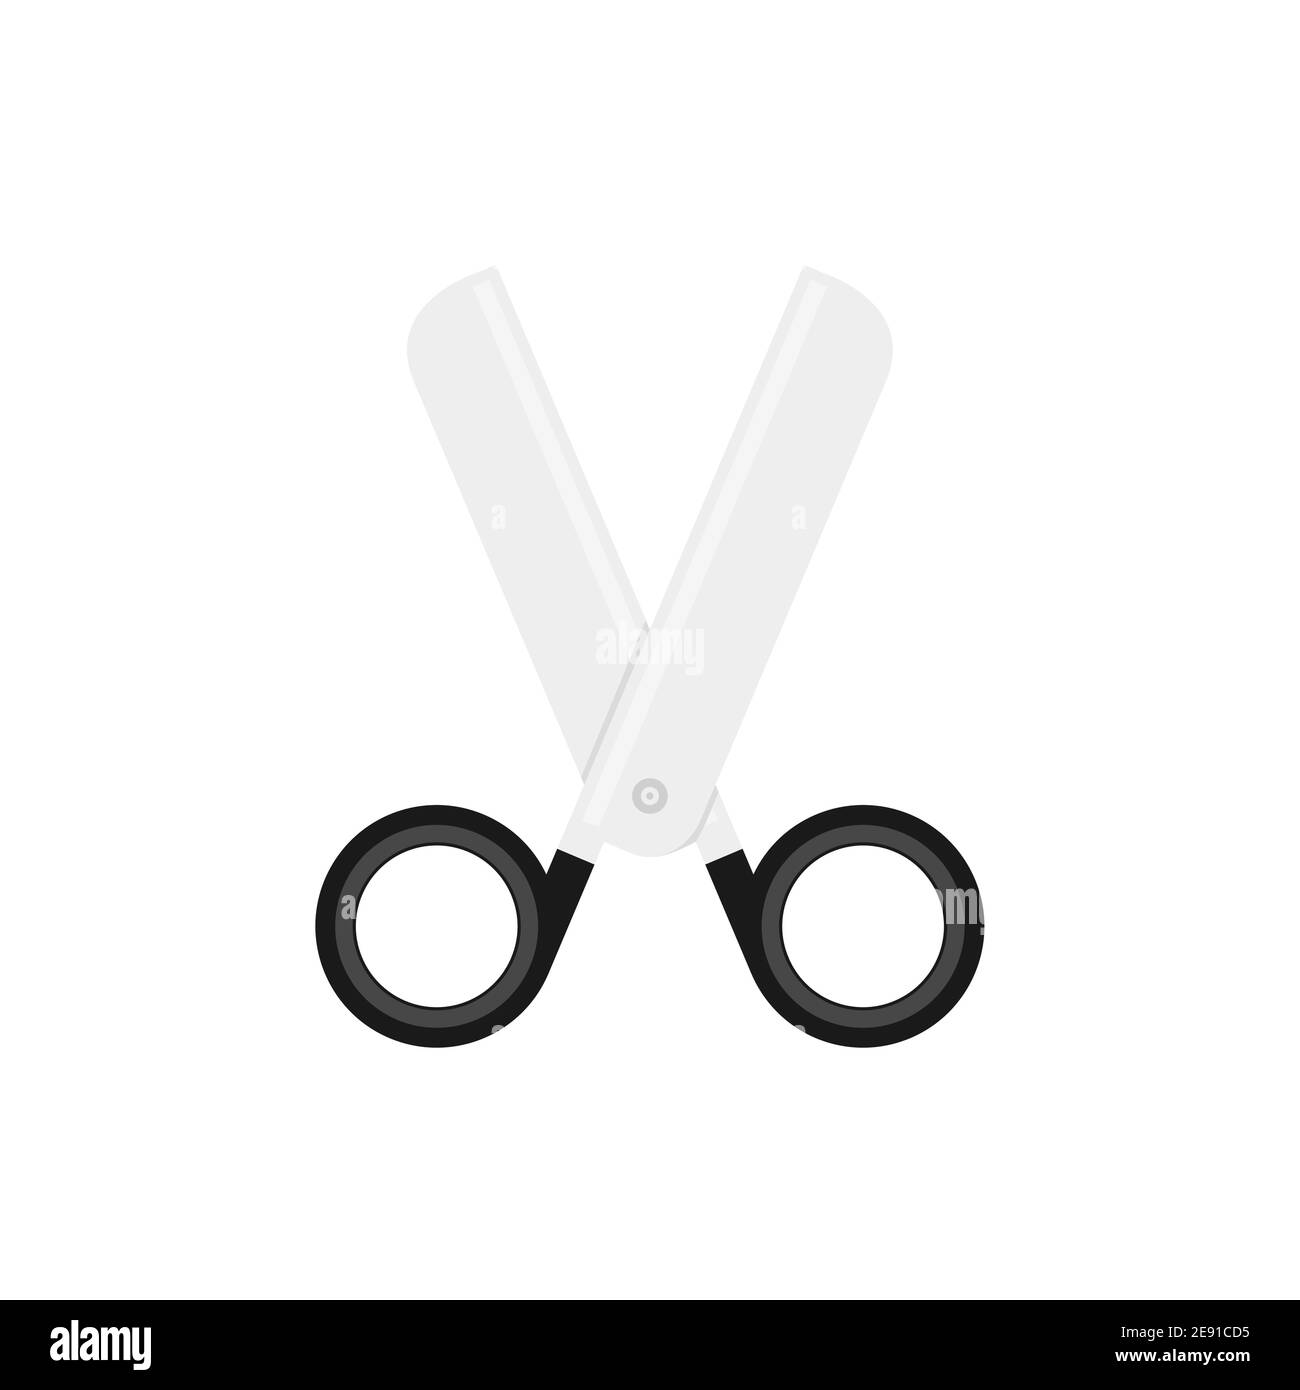 Office Scissors Line Art Black And White Scissors For Coloring